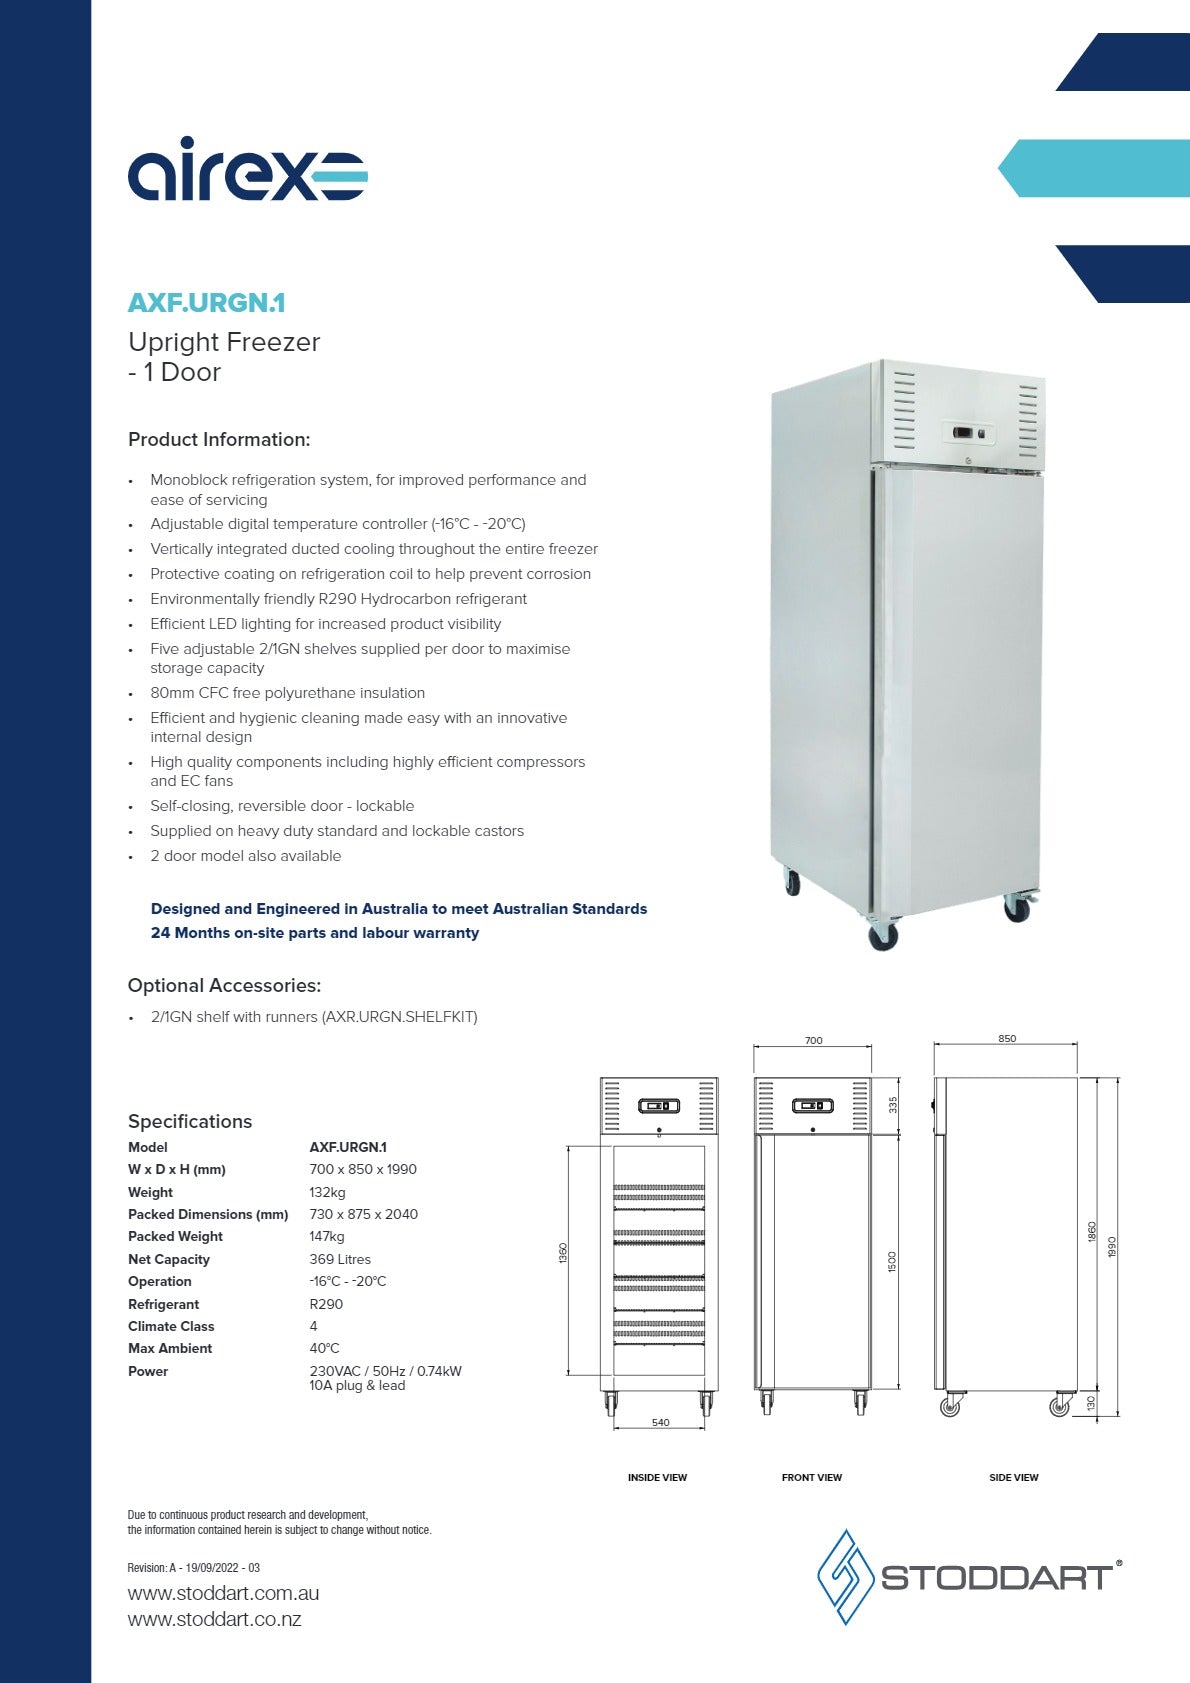 Thumbnail - Airex AXF.URGN.1 - Upright Freezer